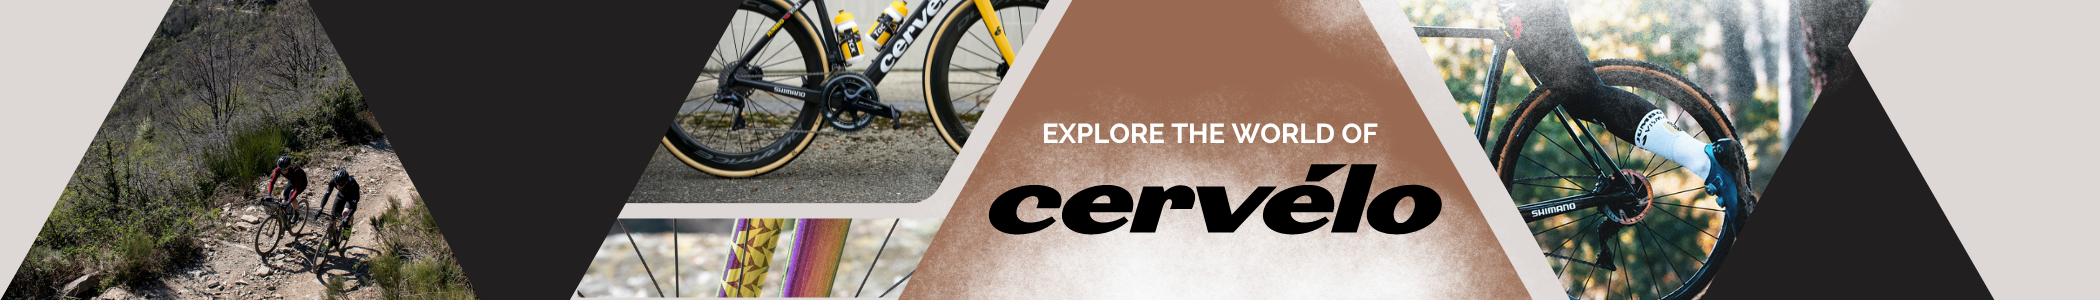 Explore the world of Cervelo!